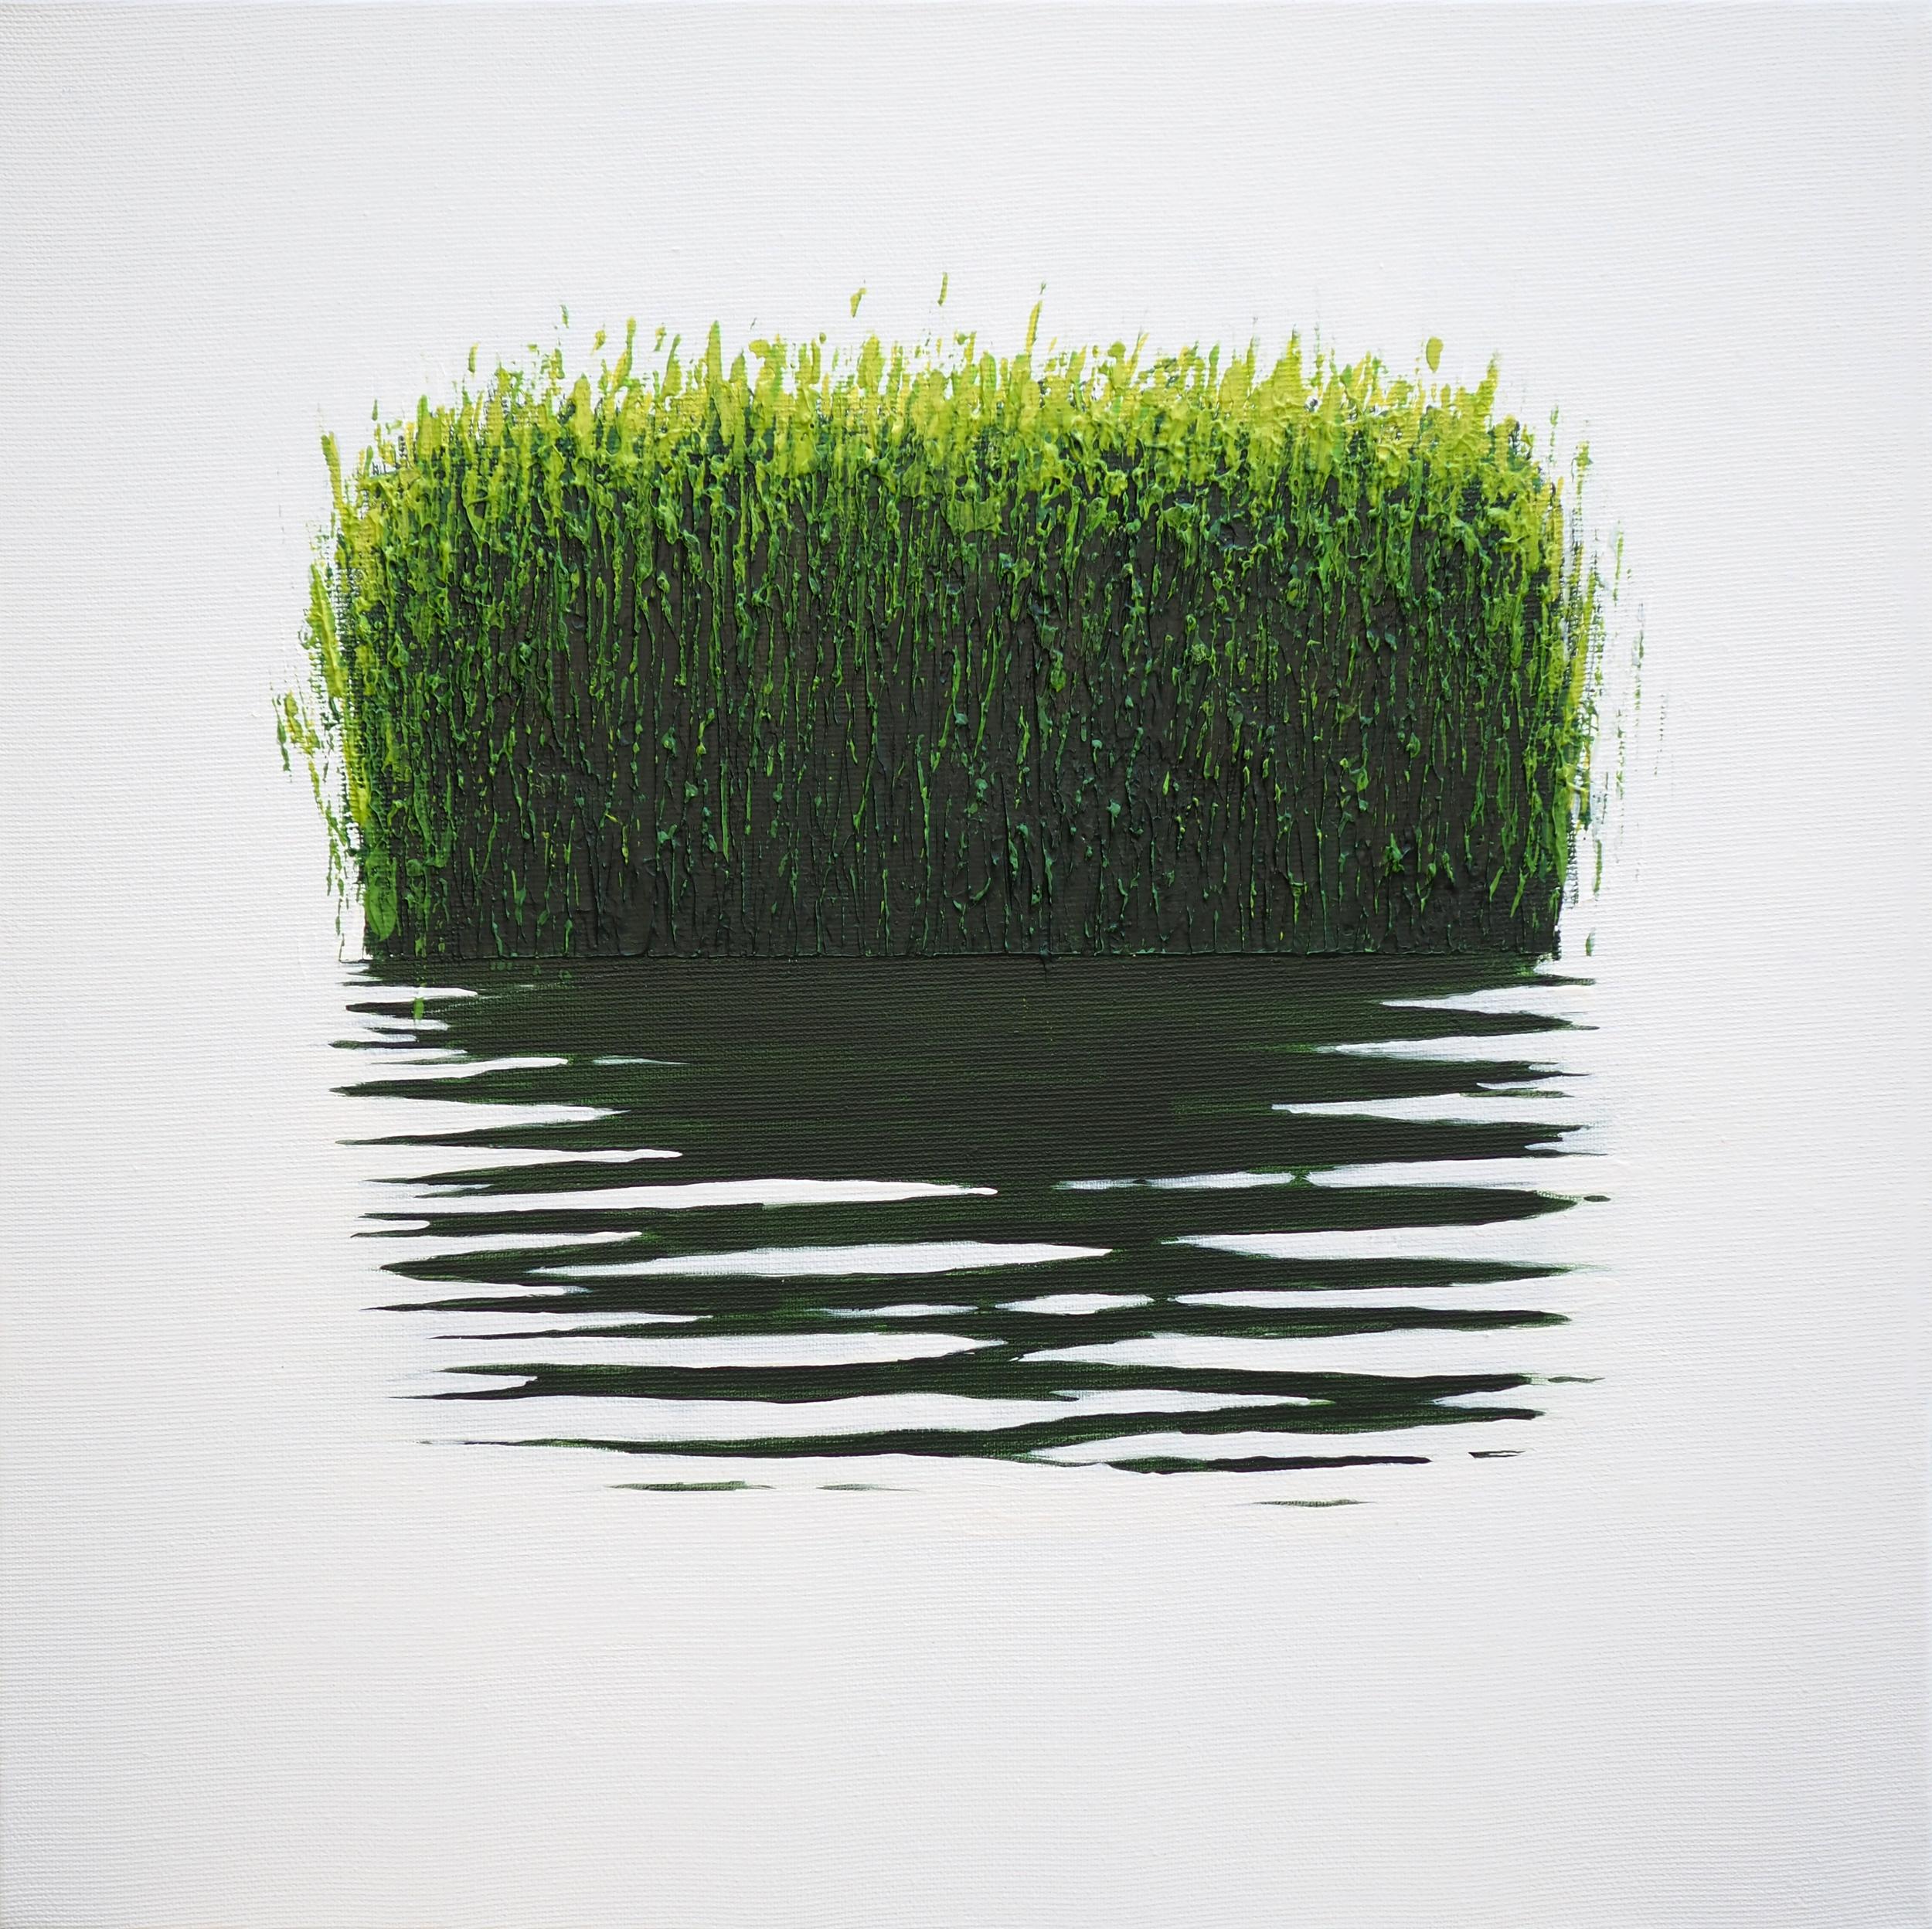 Grzegorz Wójcik Figurative Painting - GRASSES  V - Atmospheric Landscape, Modern Seascape Painting 